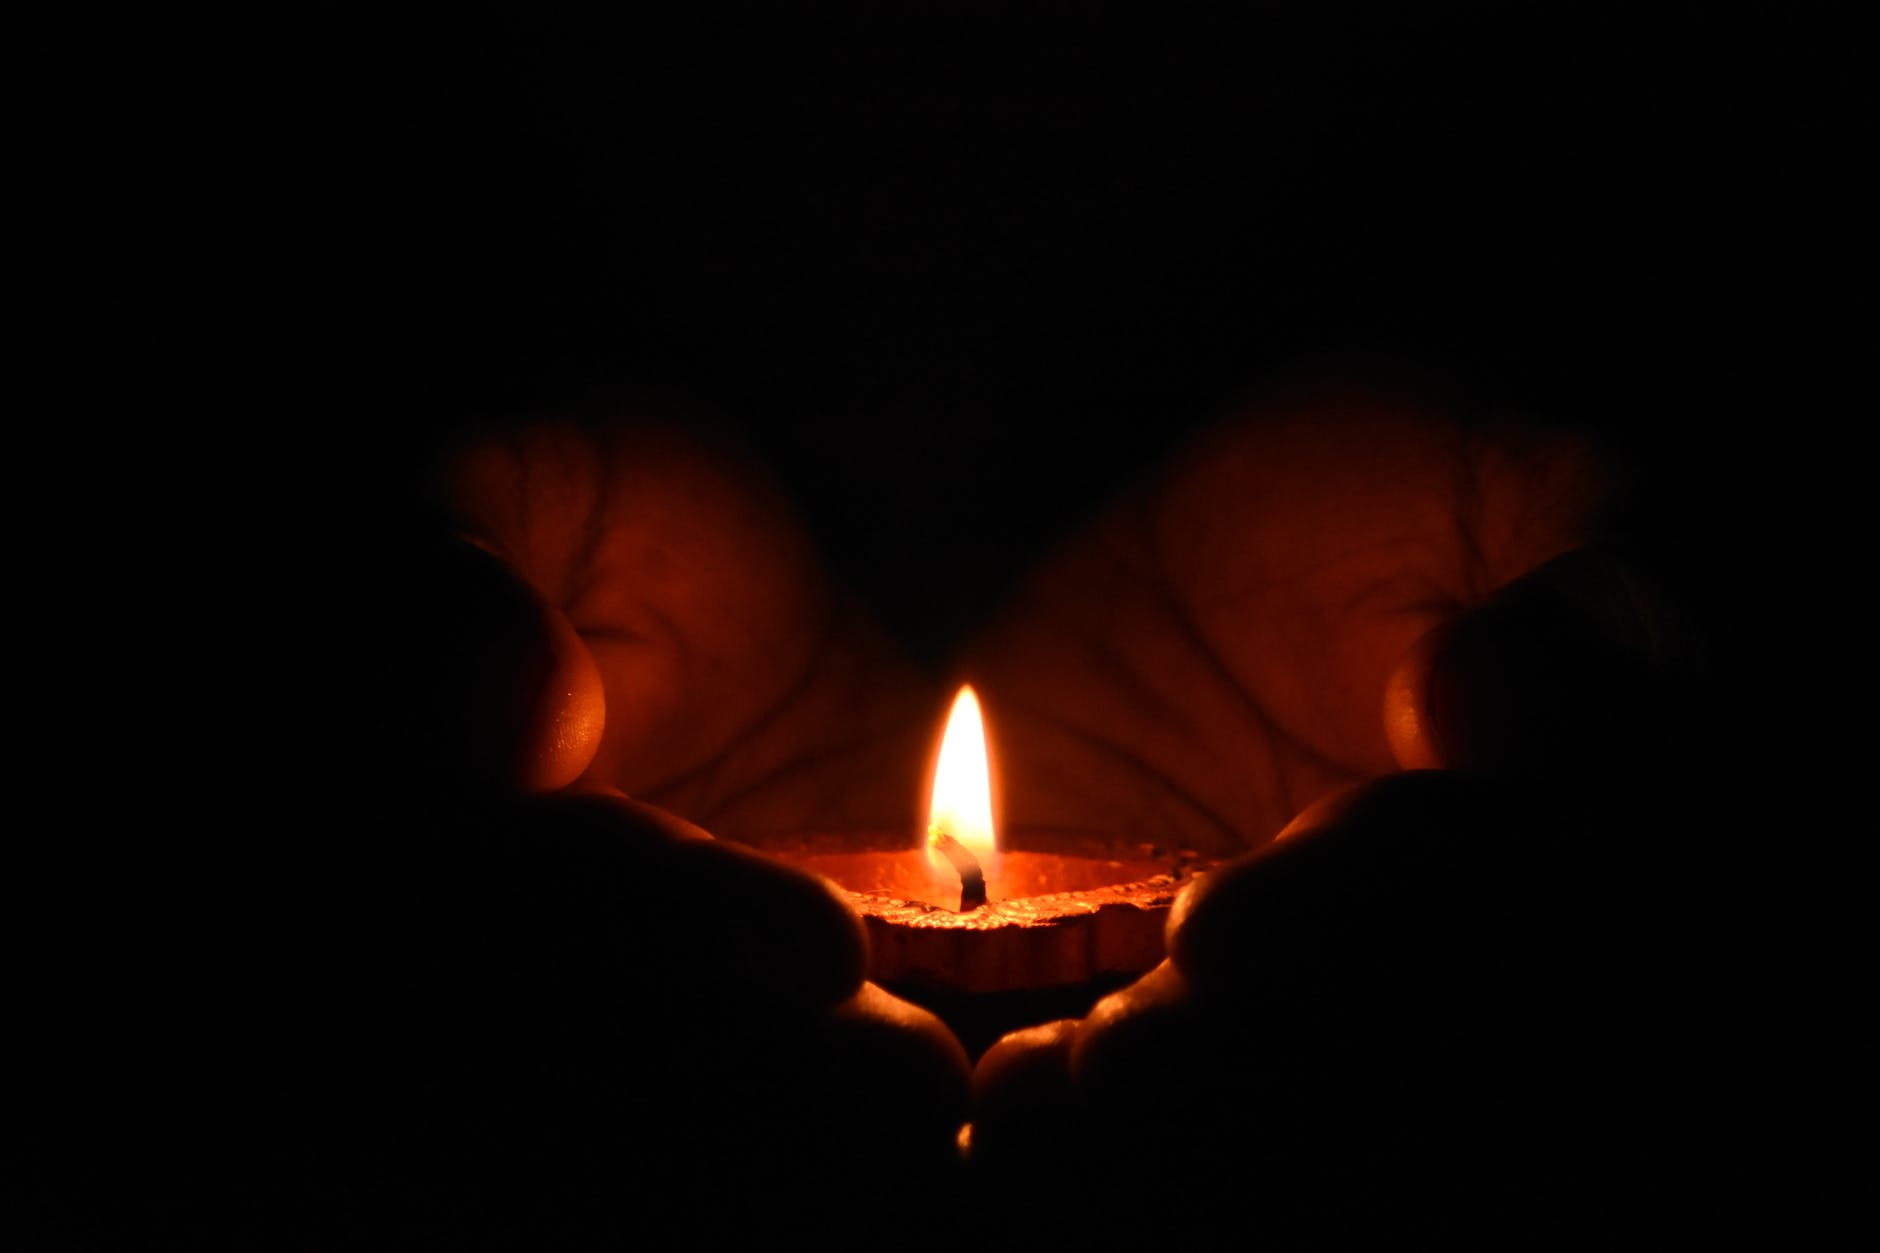 tealight candle on human palms